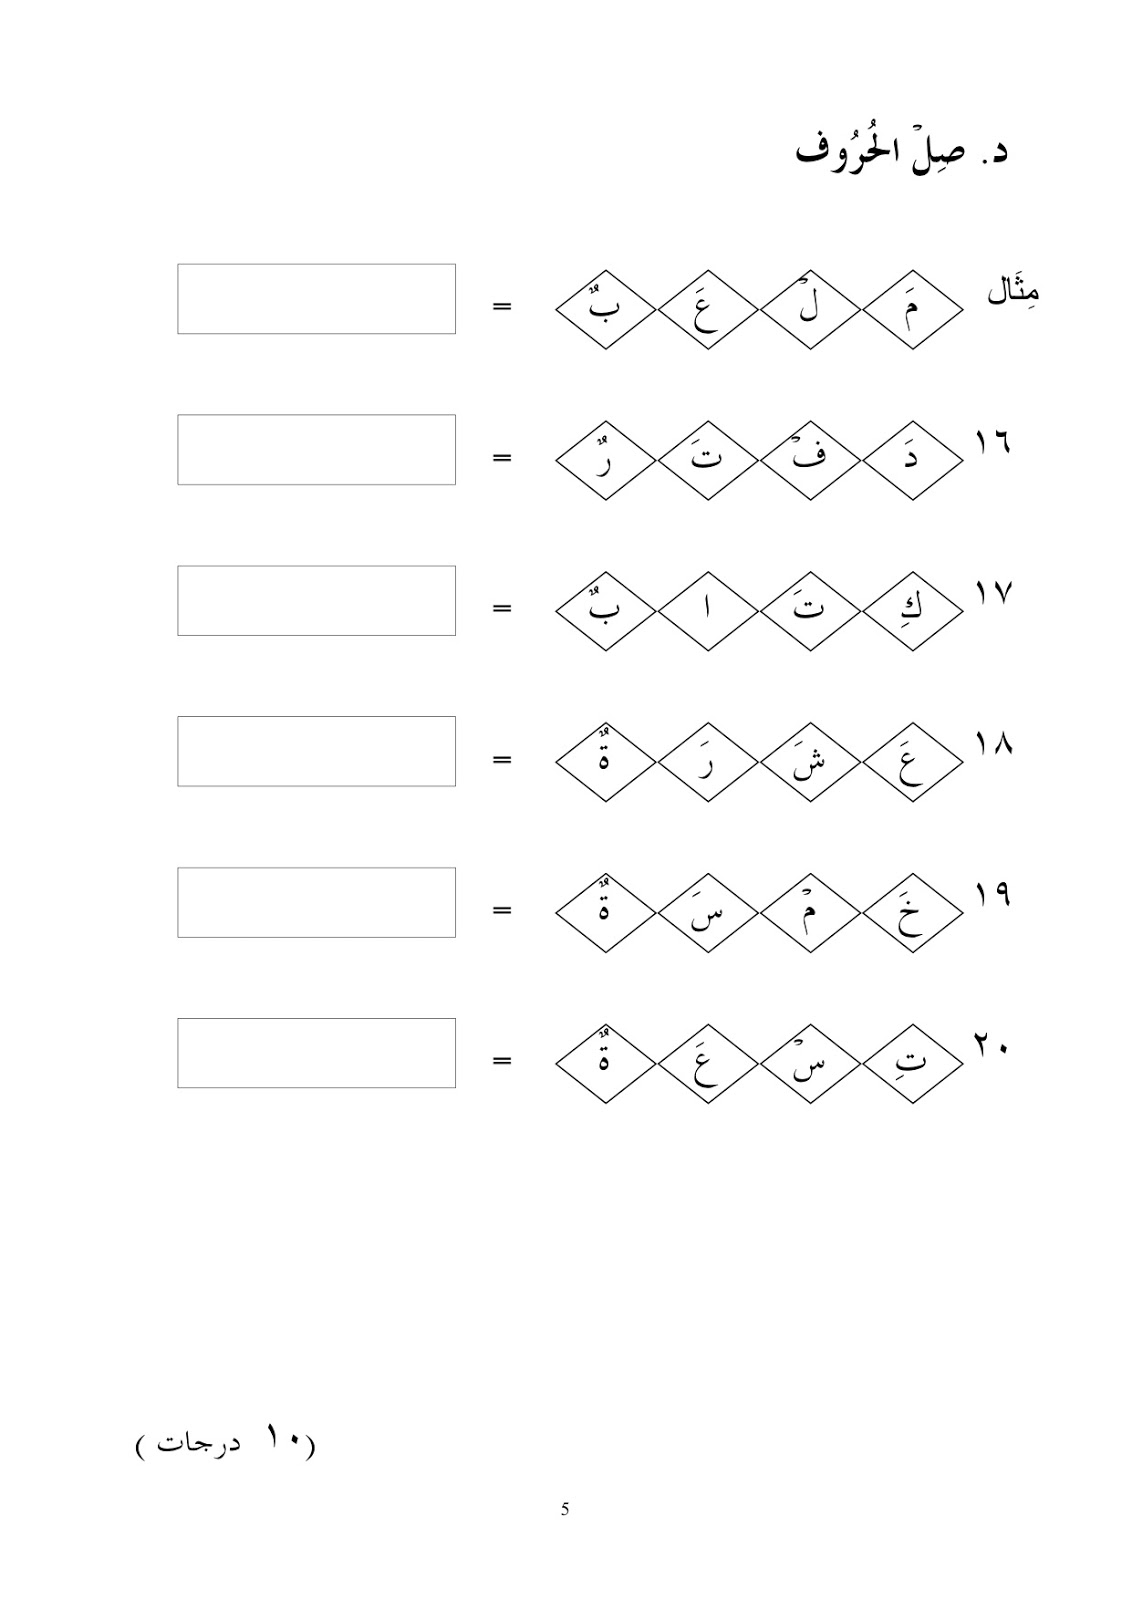 Latihan bahasa arab tahun 1